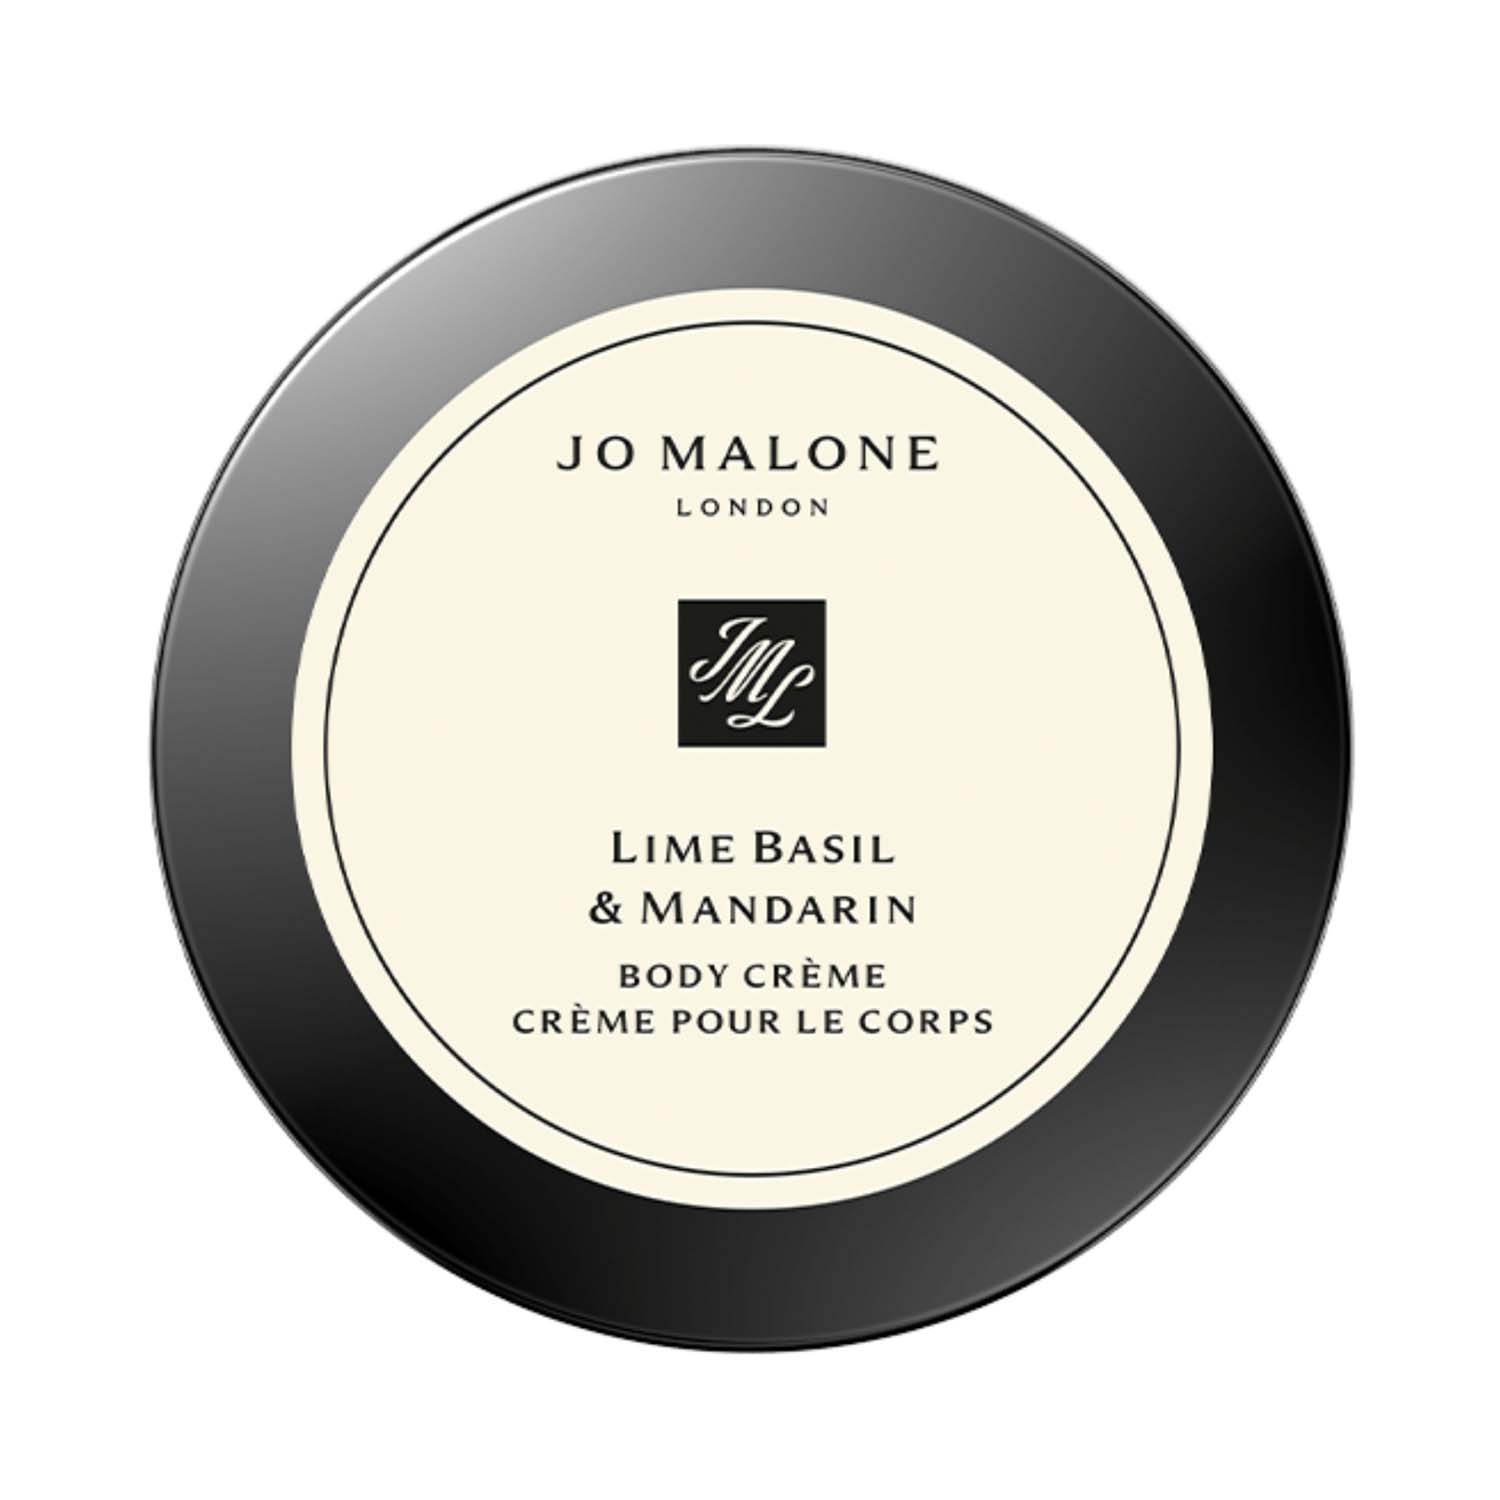 Jo Malone London Lime Basil & Mandarin Body Creme (50ml)